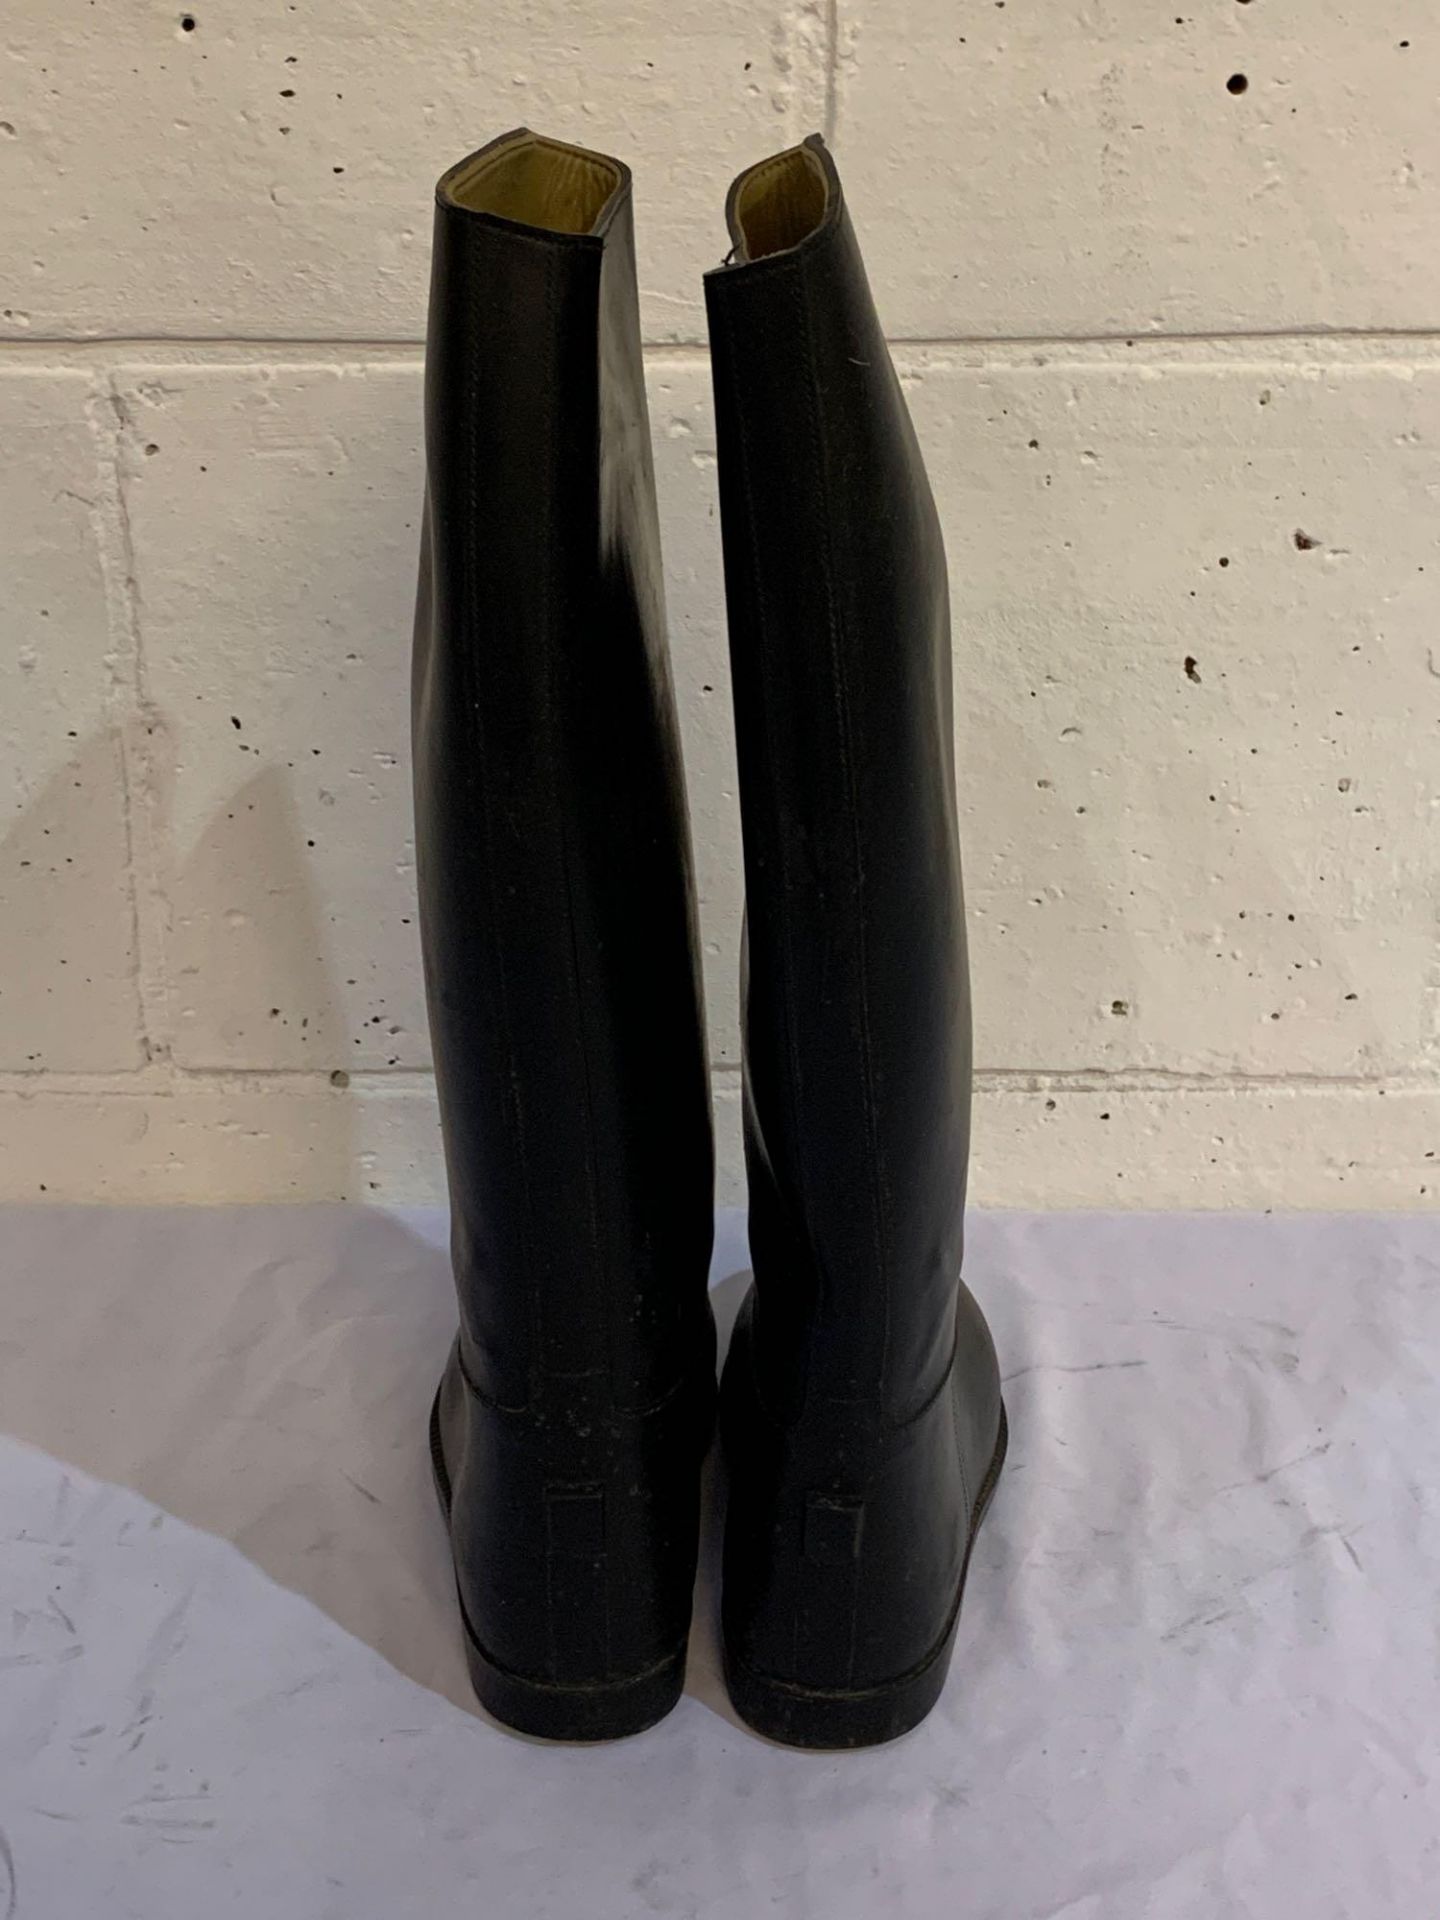 Kudu long black riding boots, size 5. - Image 3 of 3